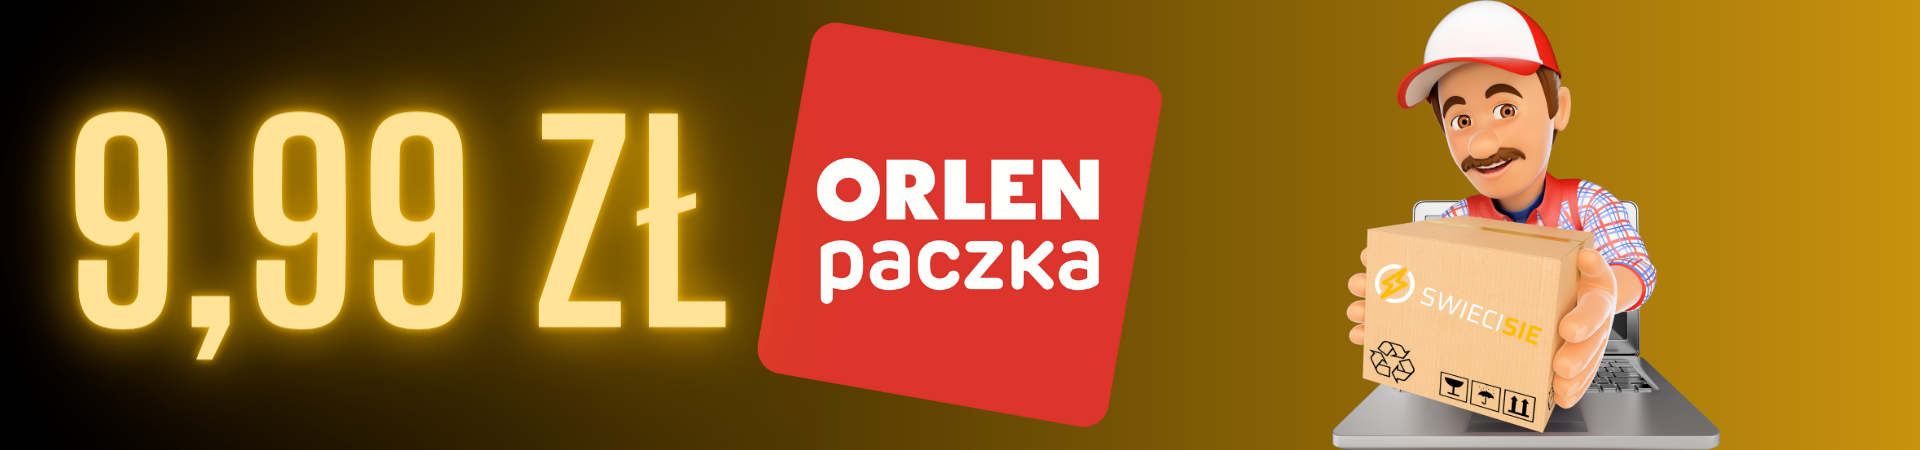 Orlen-Paczka